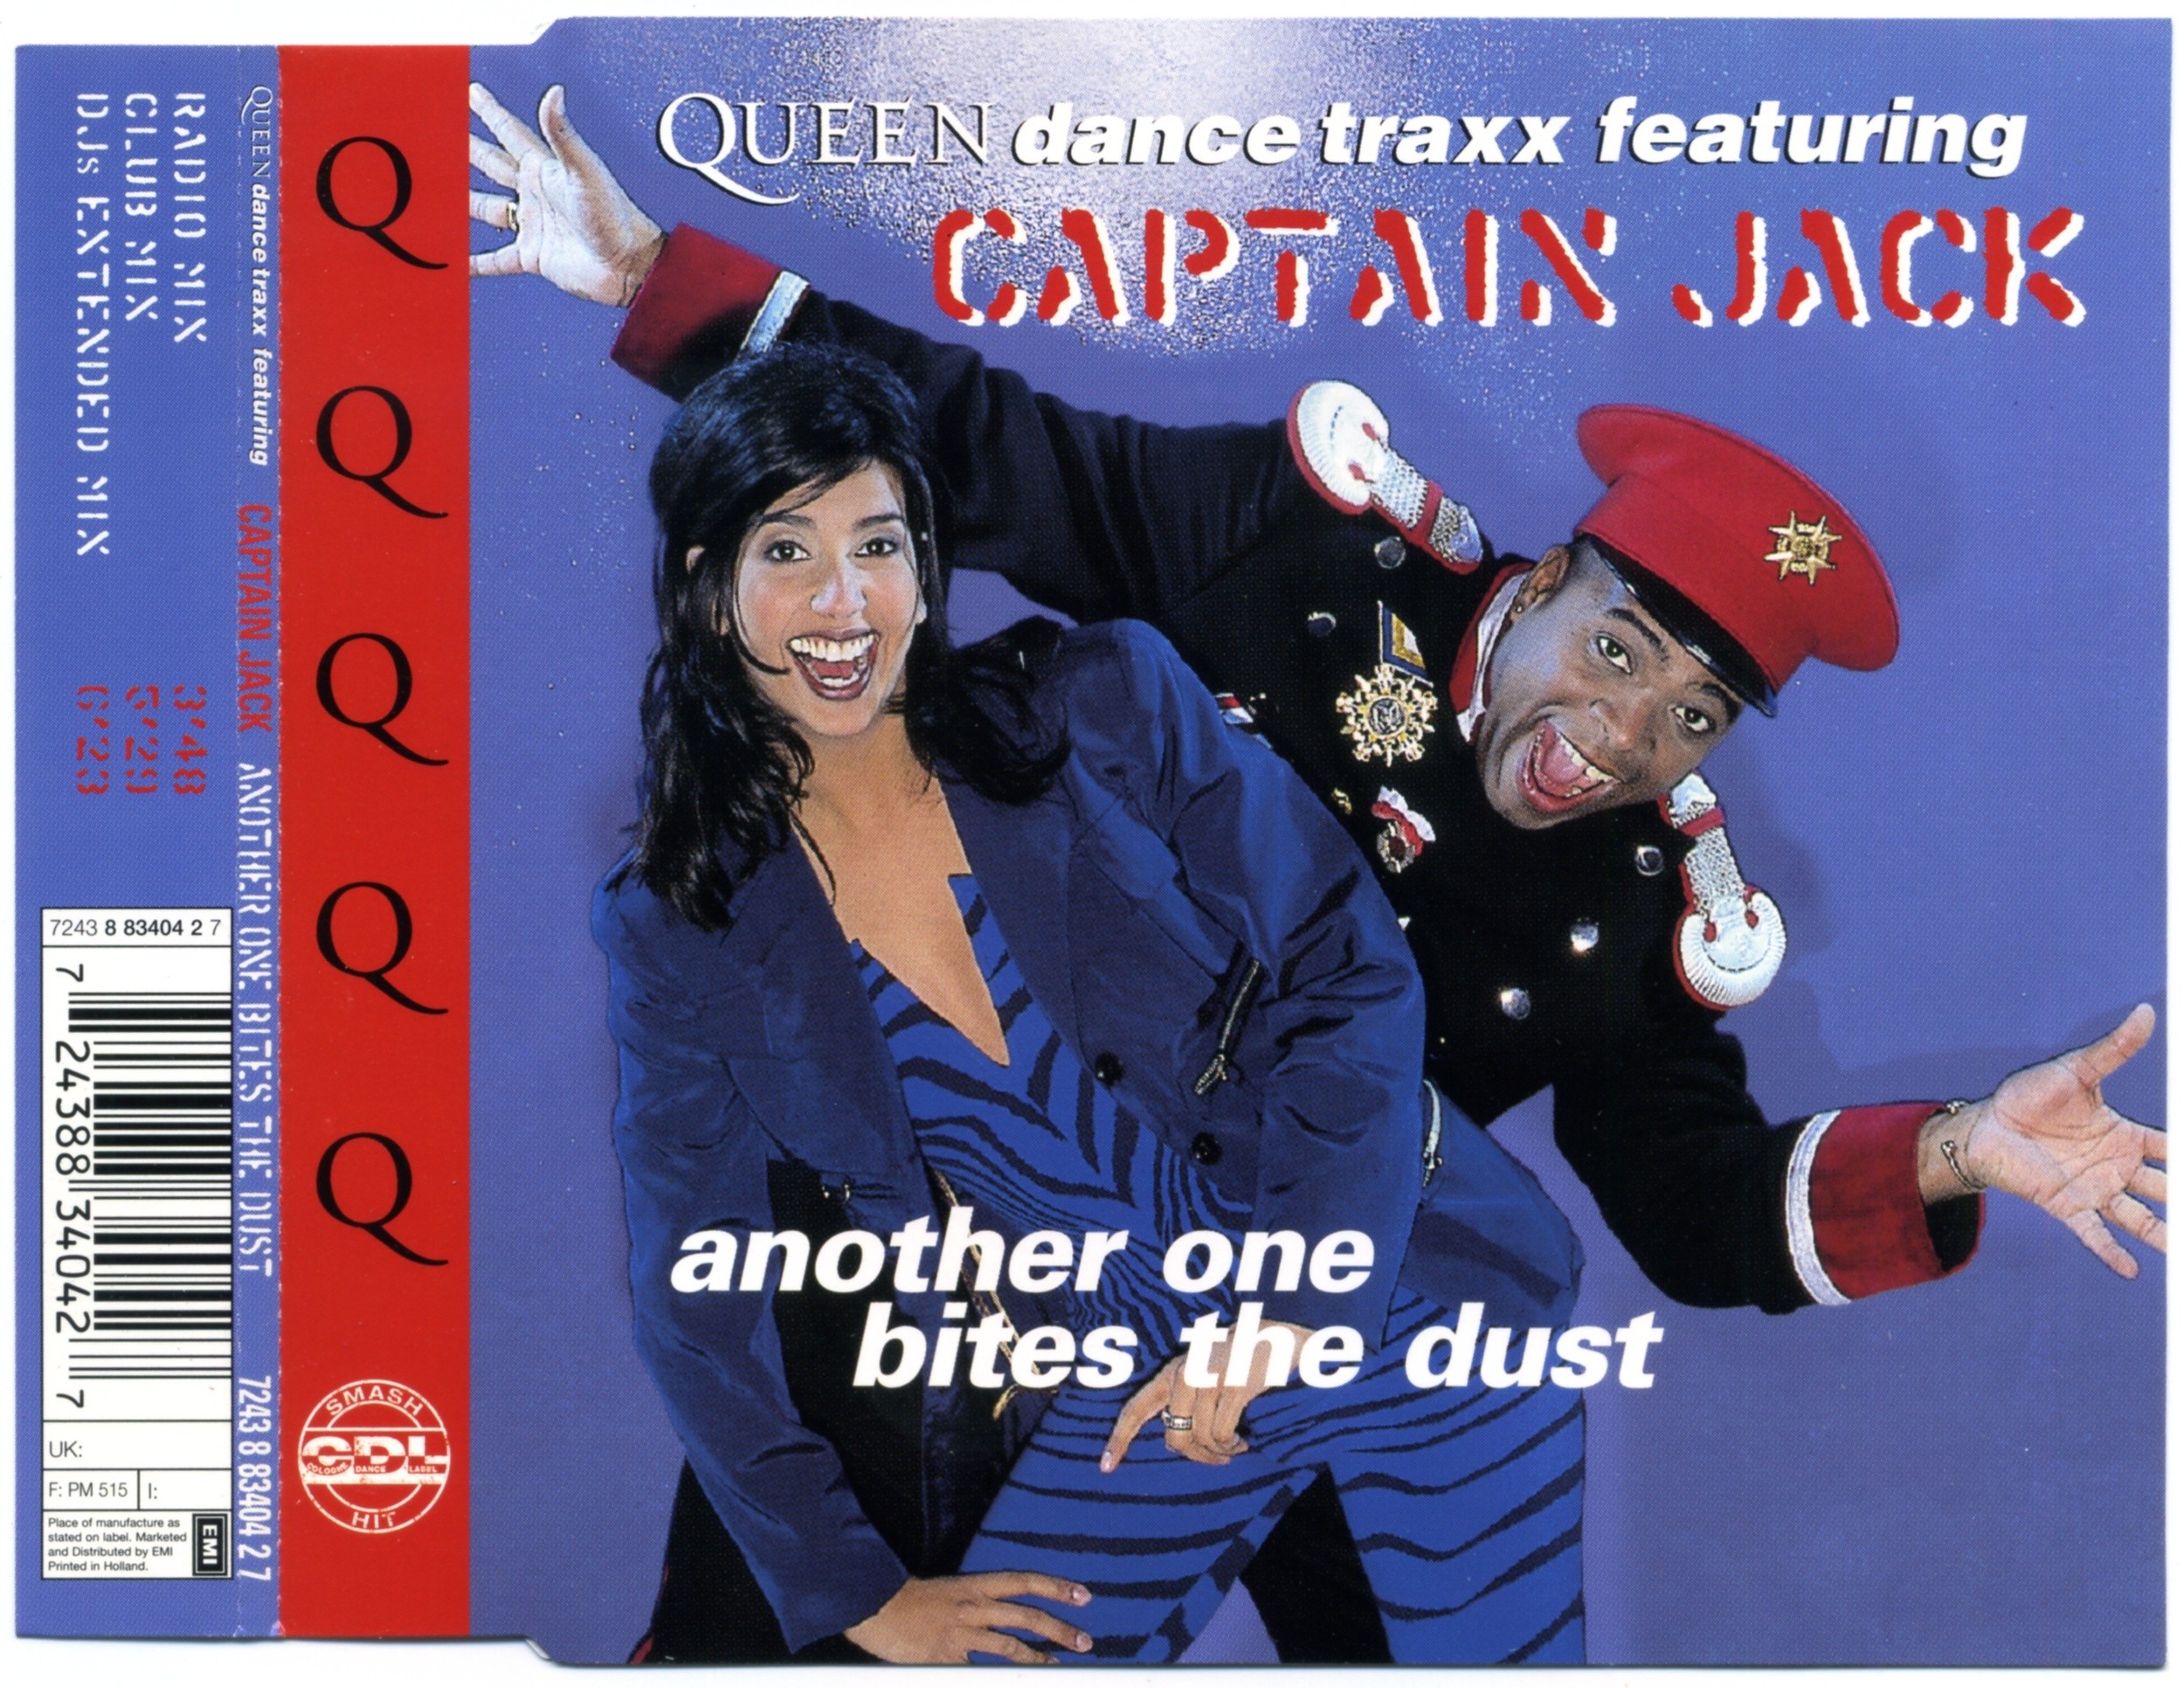 CD Single - Queen Dance Traxx Featuring Music Instructor - Friends